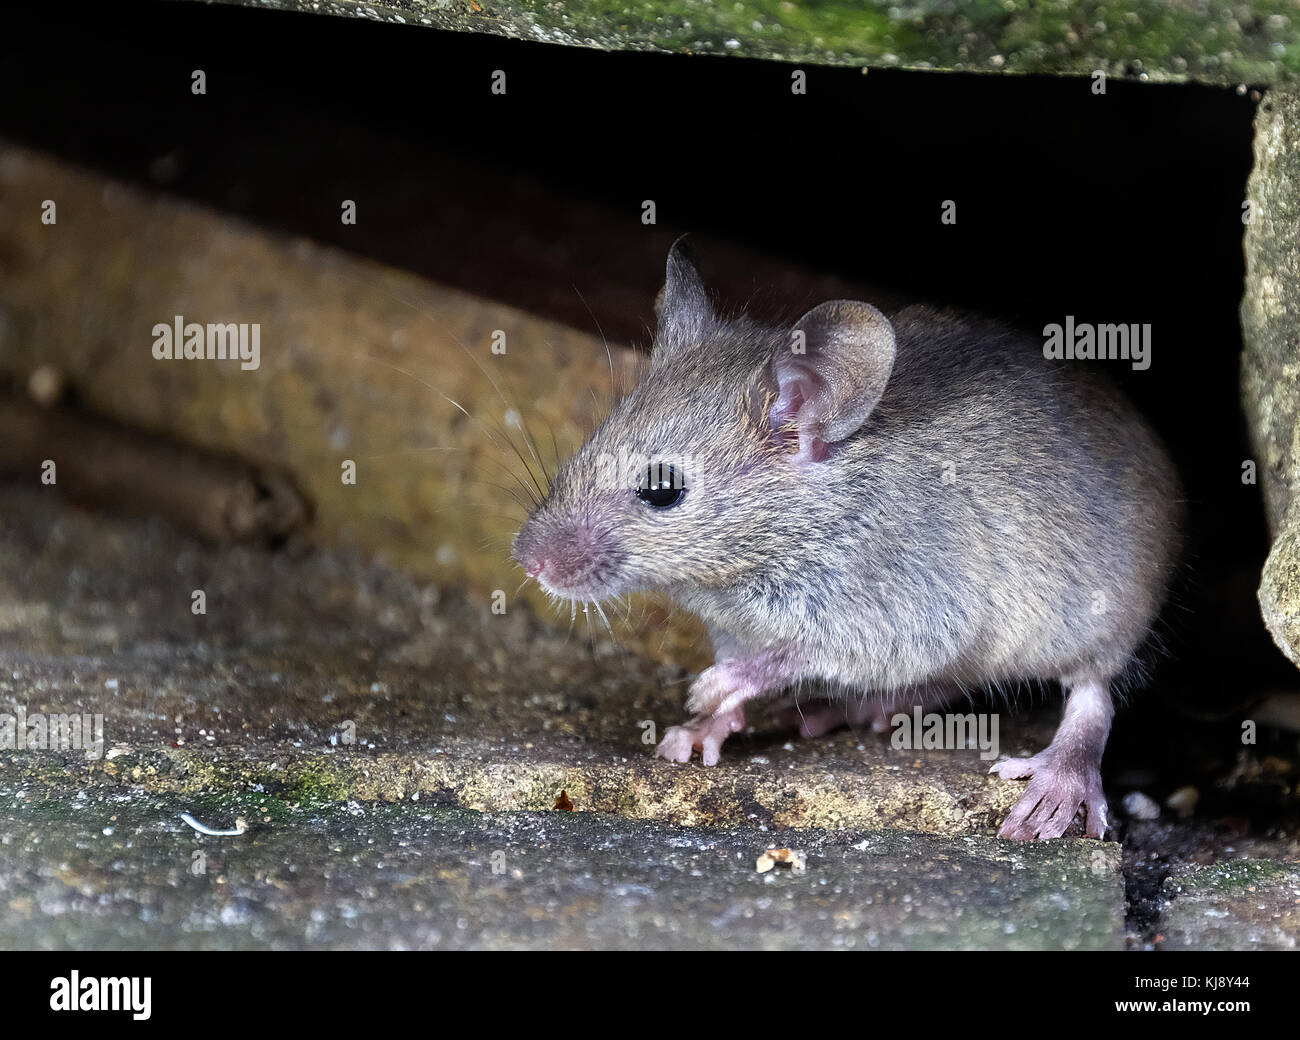 Mice feeding on cake in urban house garden. Stock Photo